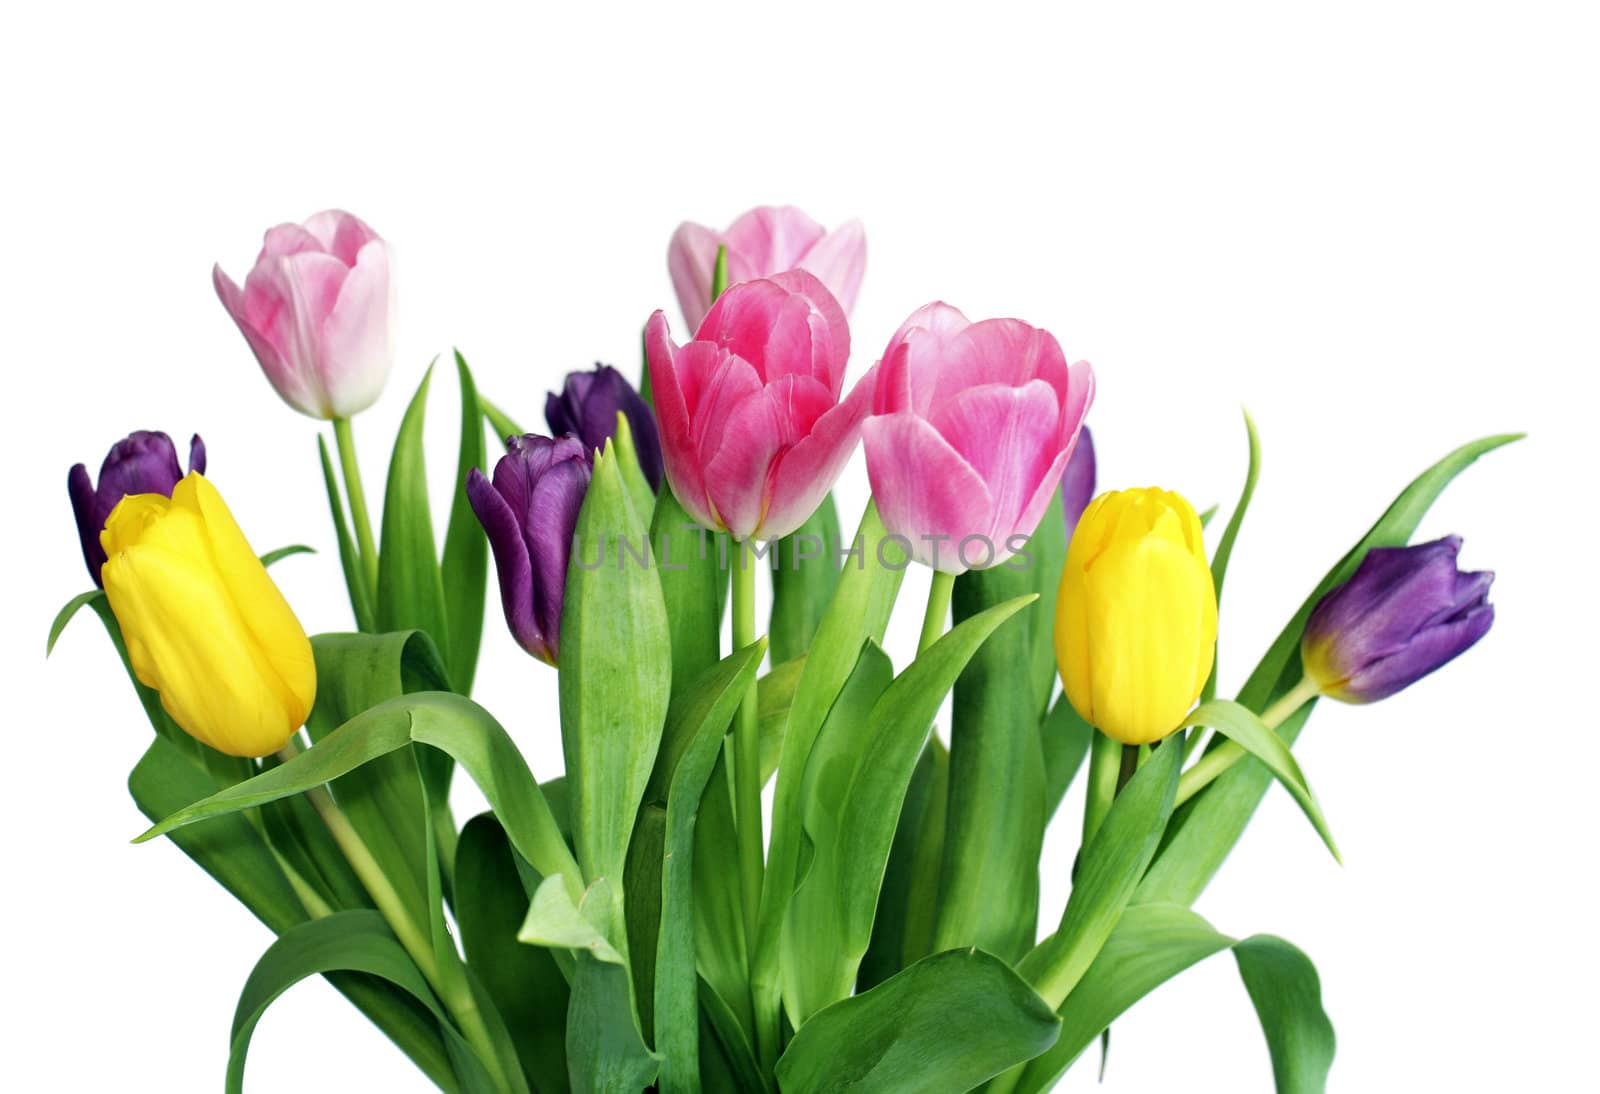 Varicoloured spring tulips by AlexKhrom